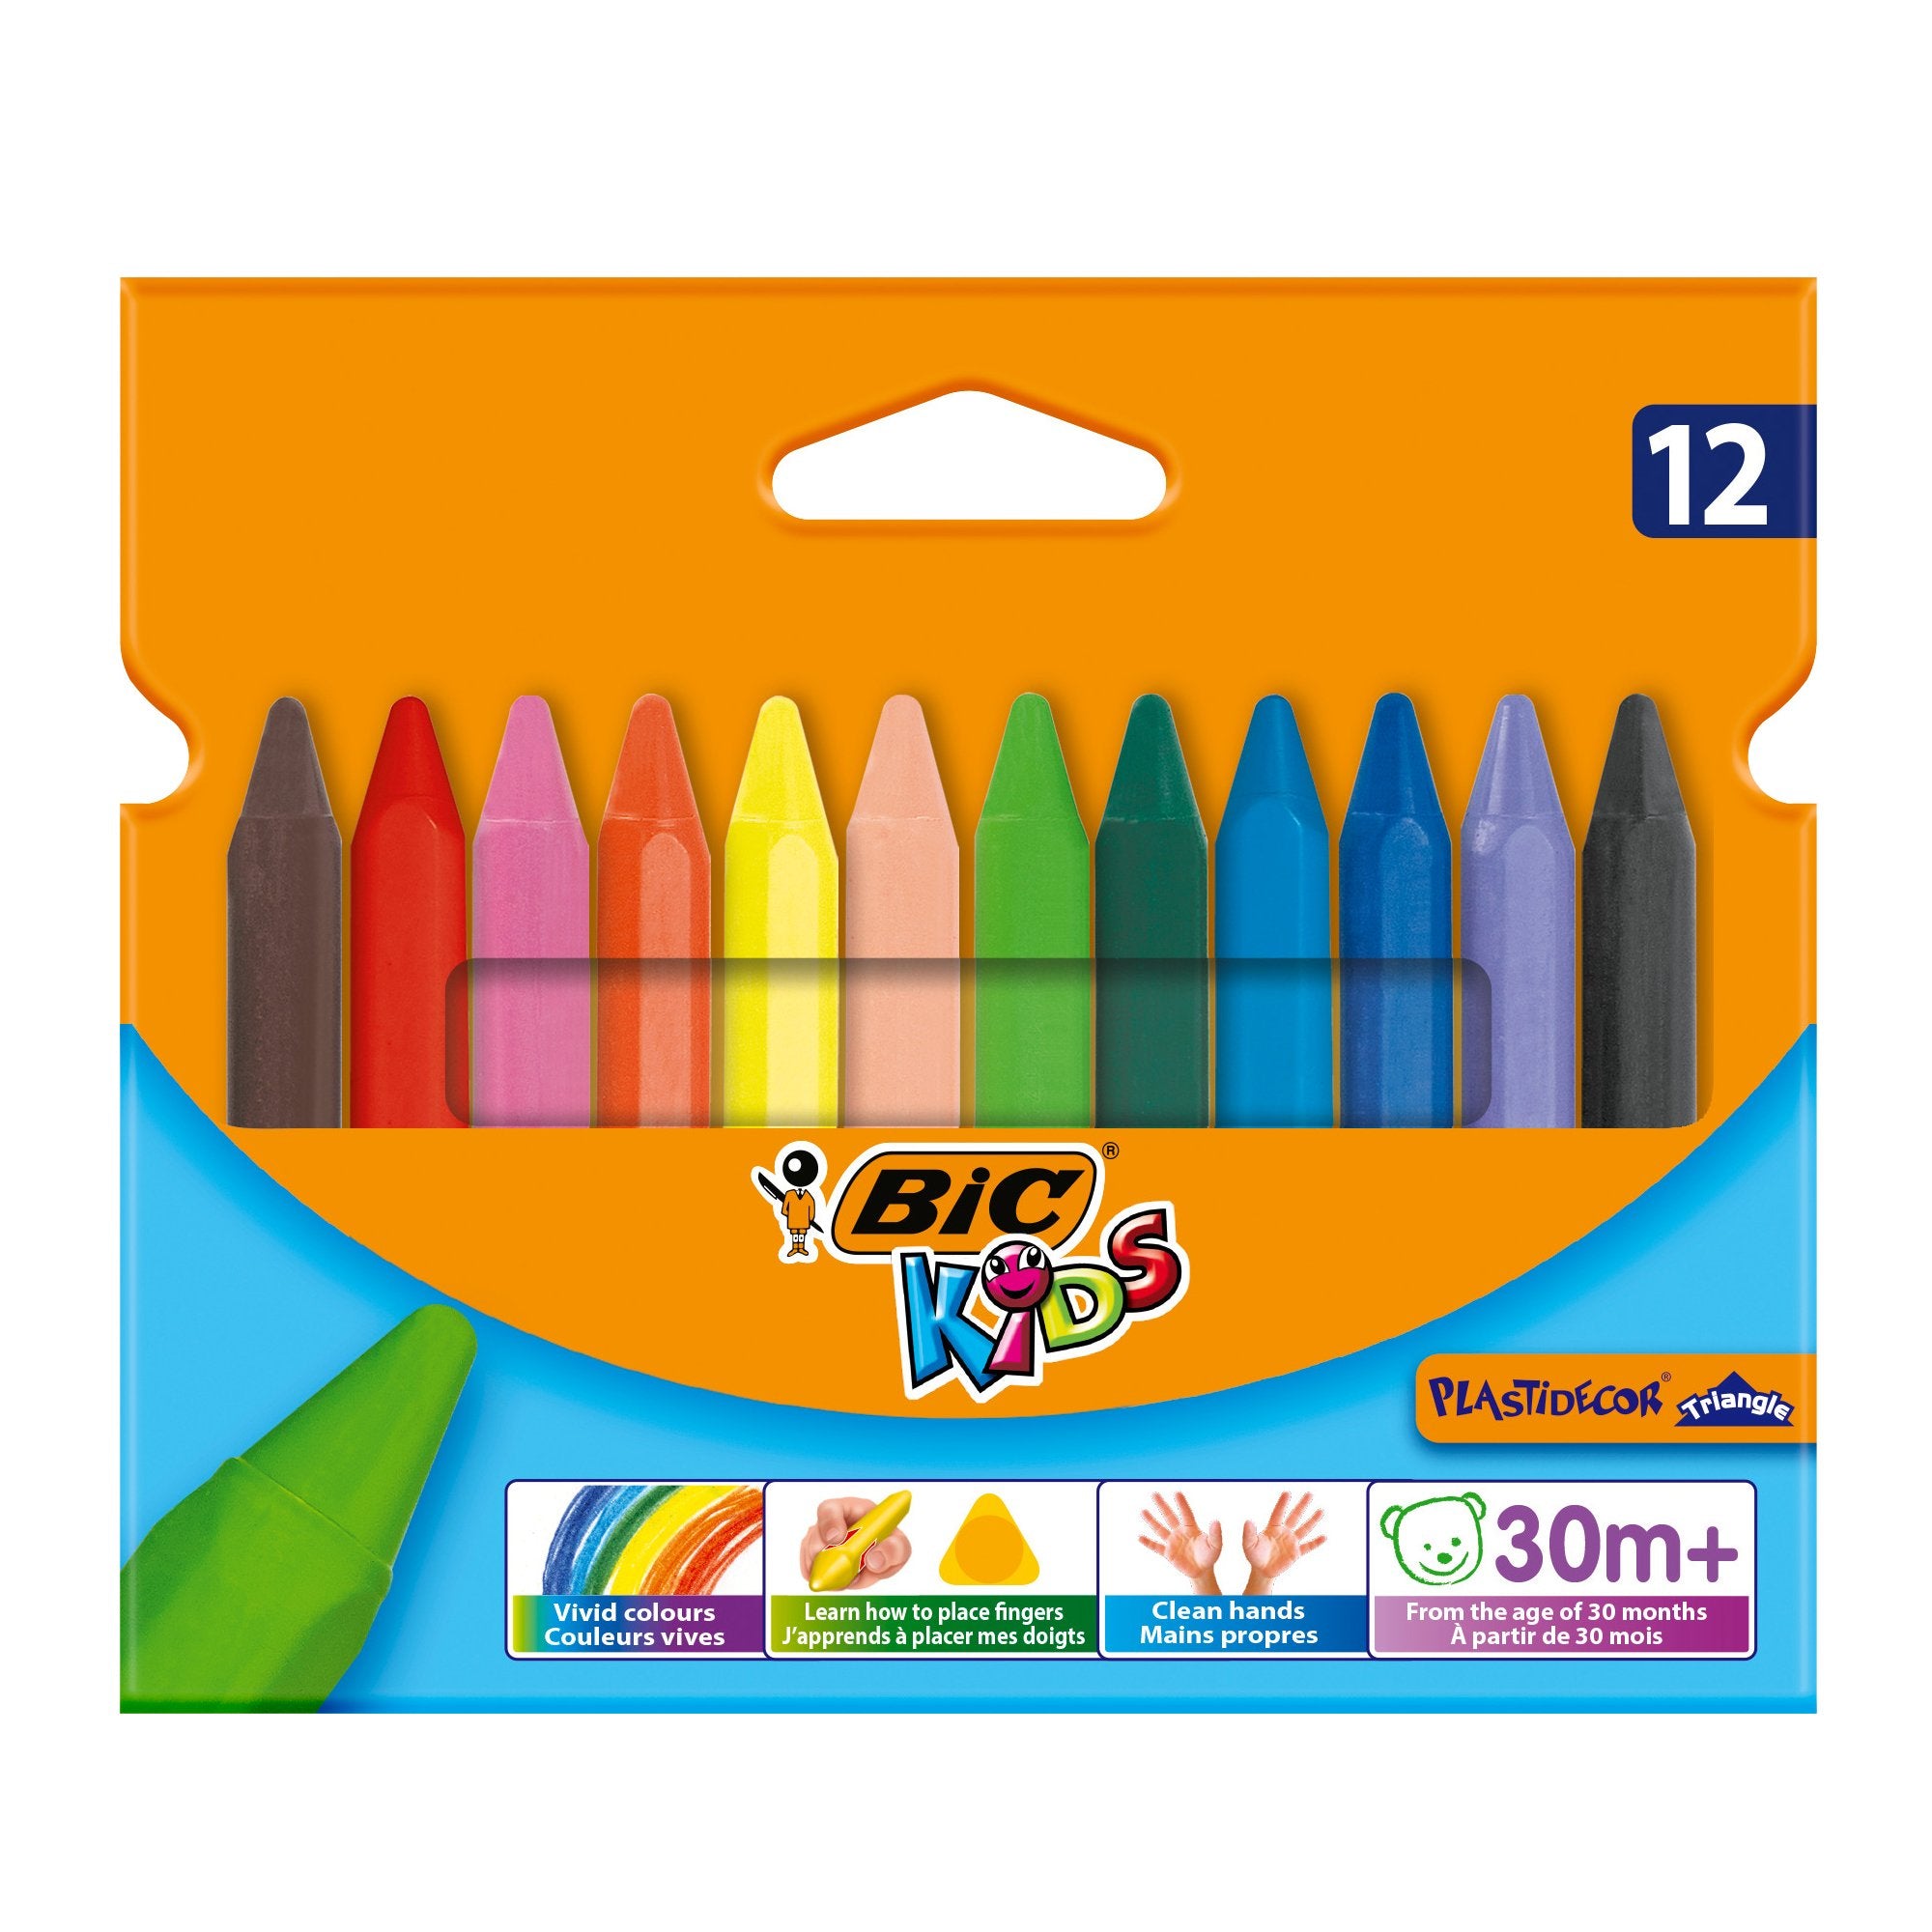 bic-kids-astuccio-12-pastelli-kids-plastidecor-triangle-bic